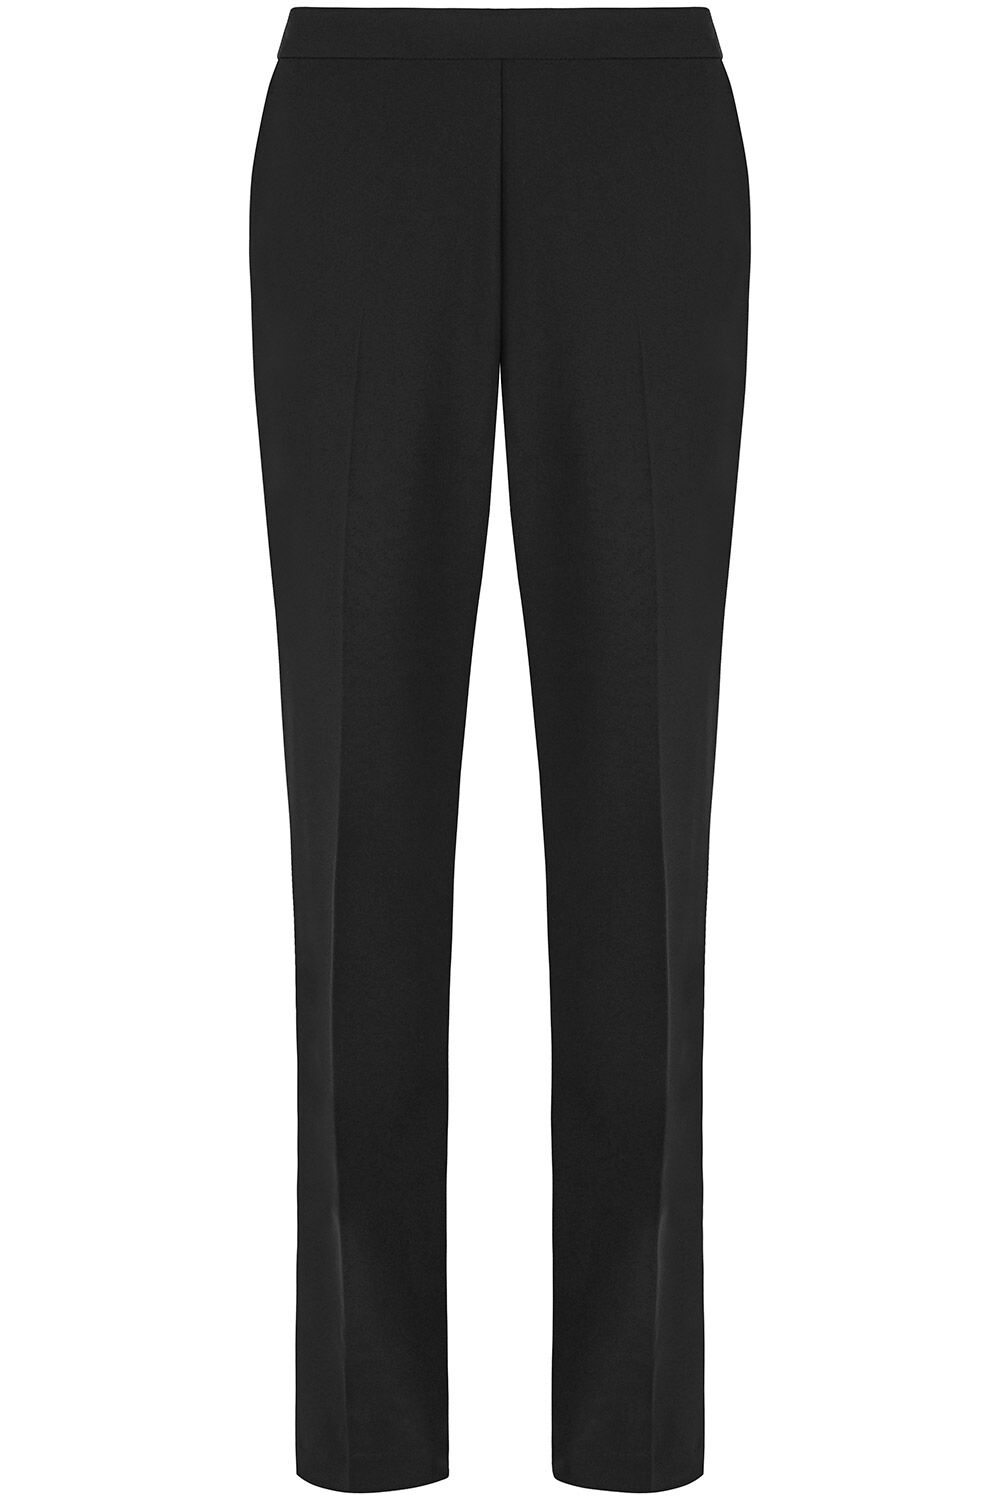 Bonmarche Plain Straight Leg Pull On Trousers - Black, Size: 24